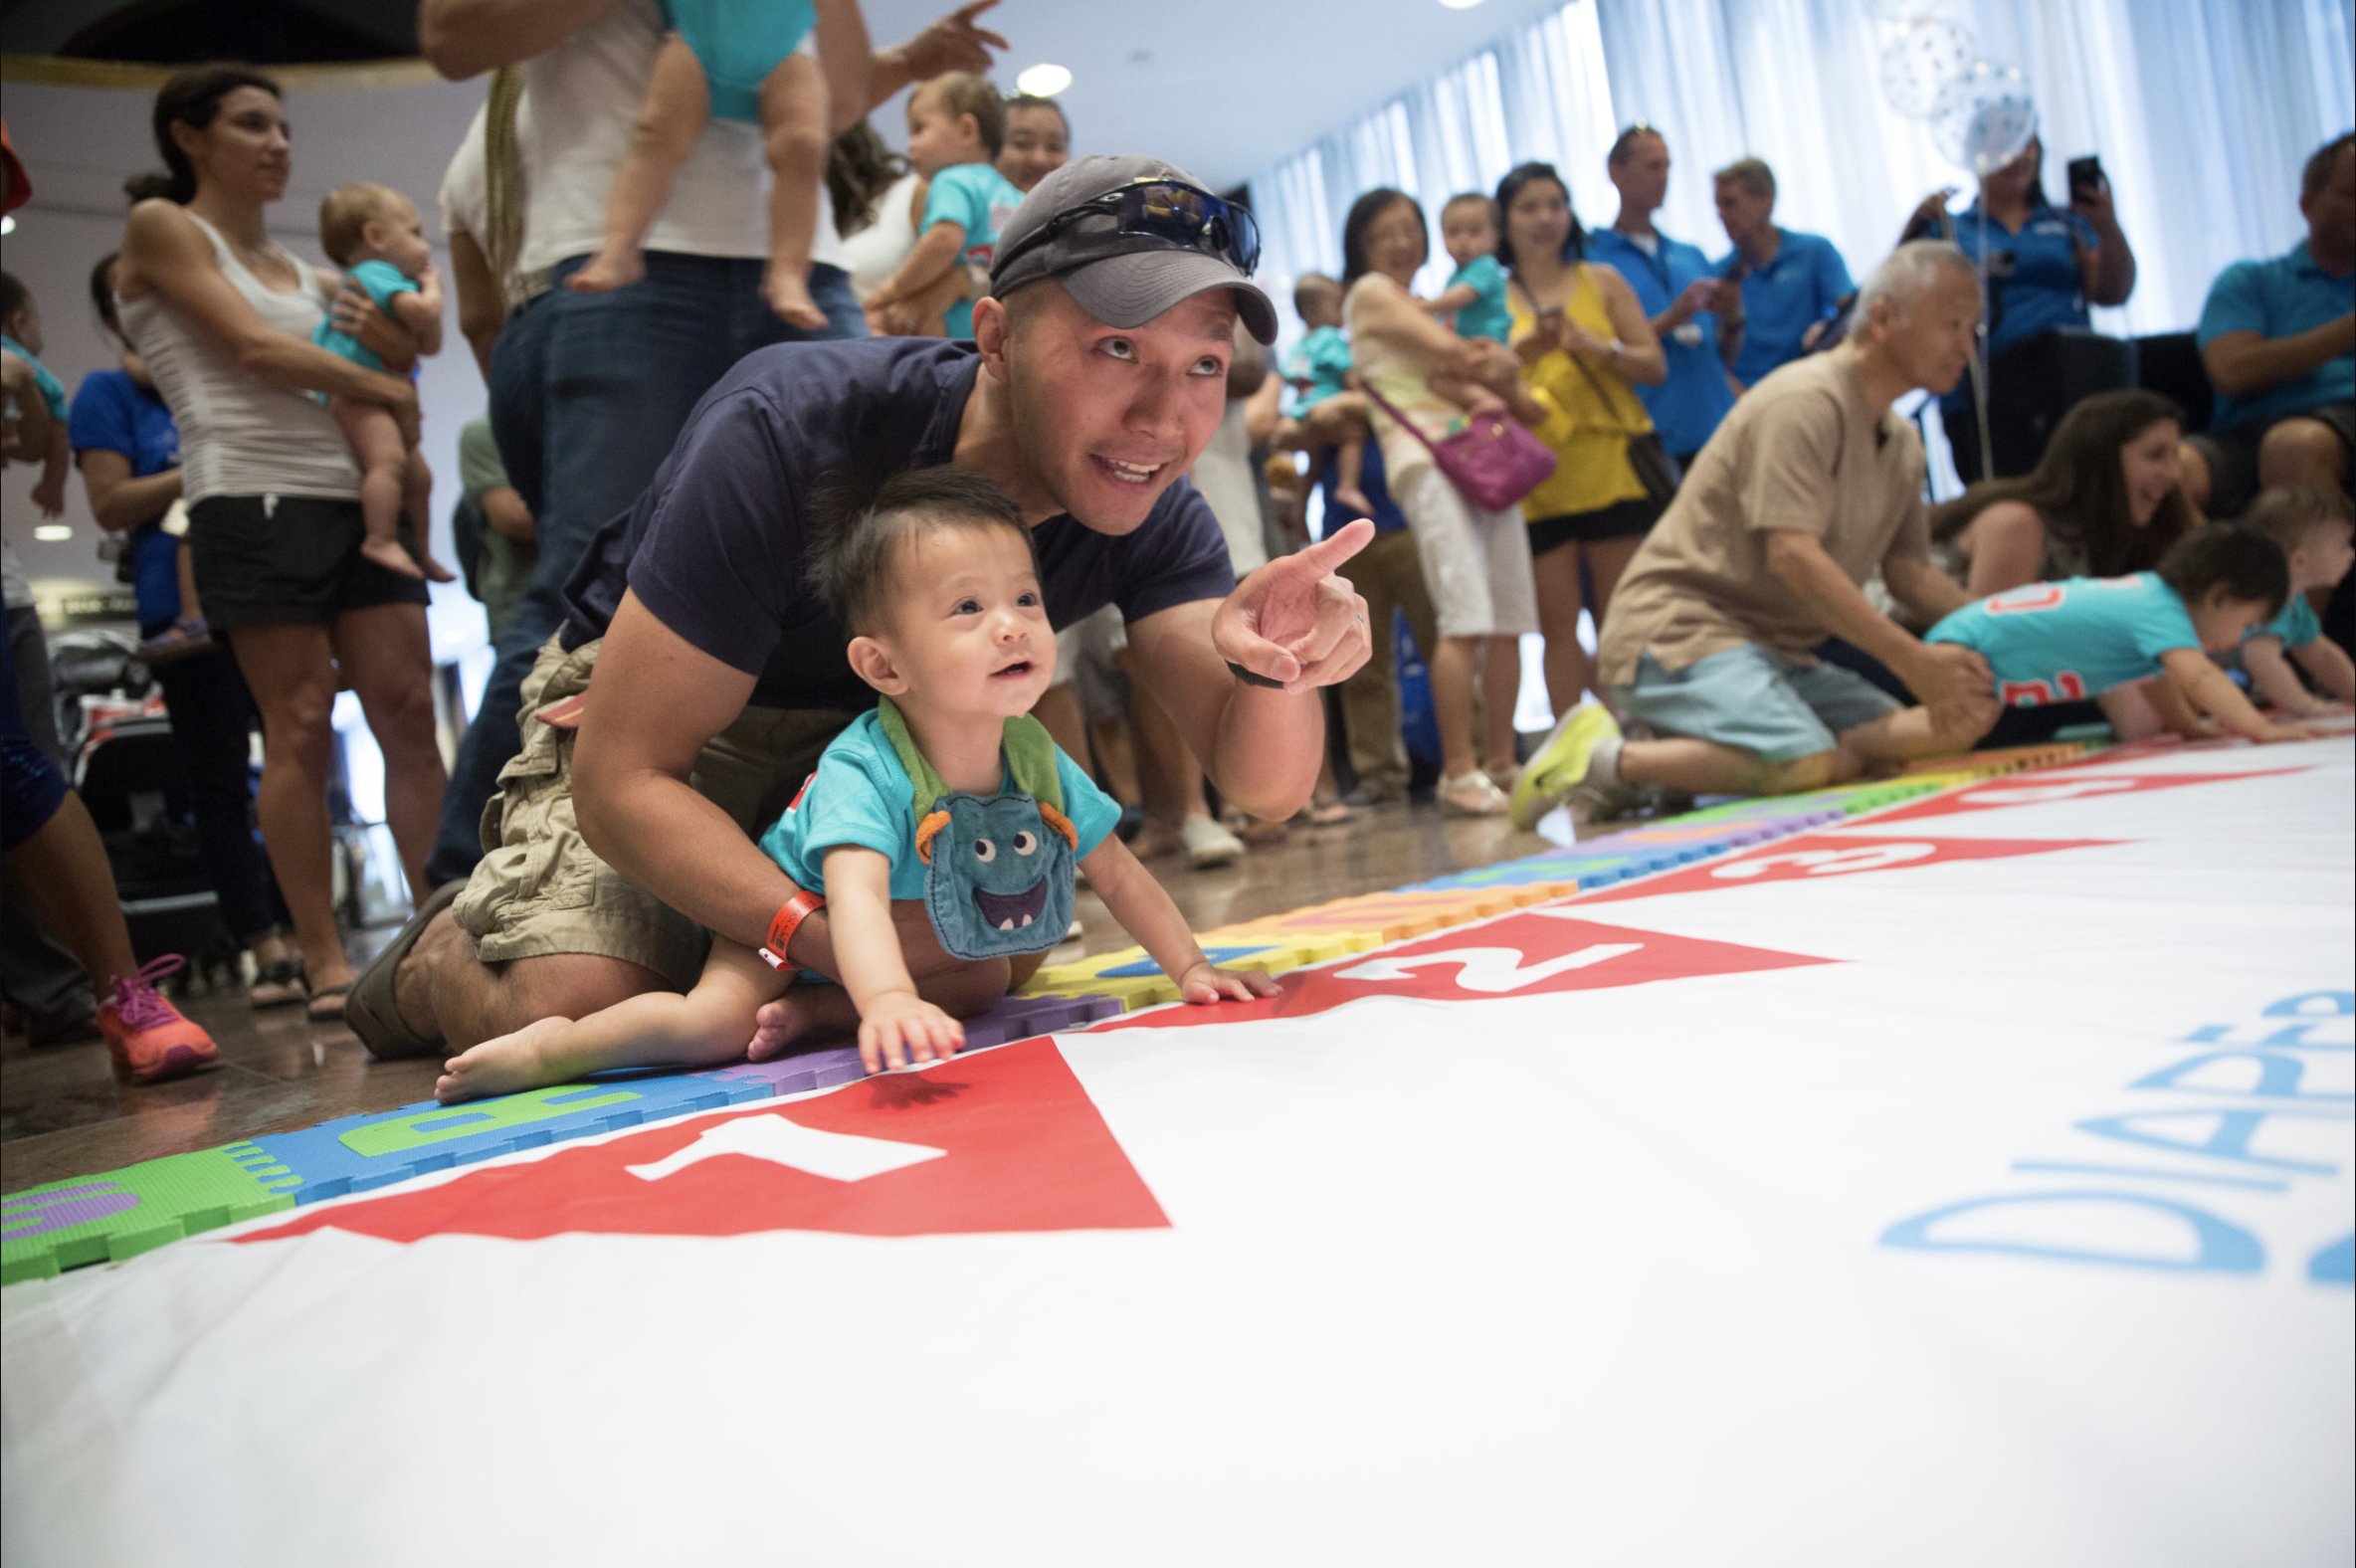 El “Life Time Diaper Derby” para 25 bebés de 6 a 12 meses se celebró el viernes en el Miami Famous Expo
